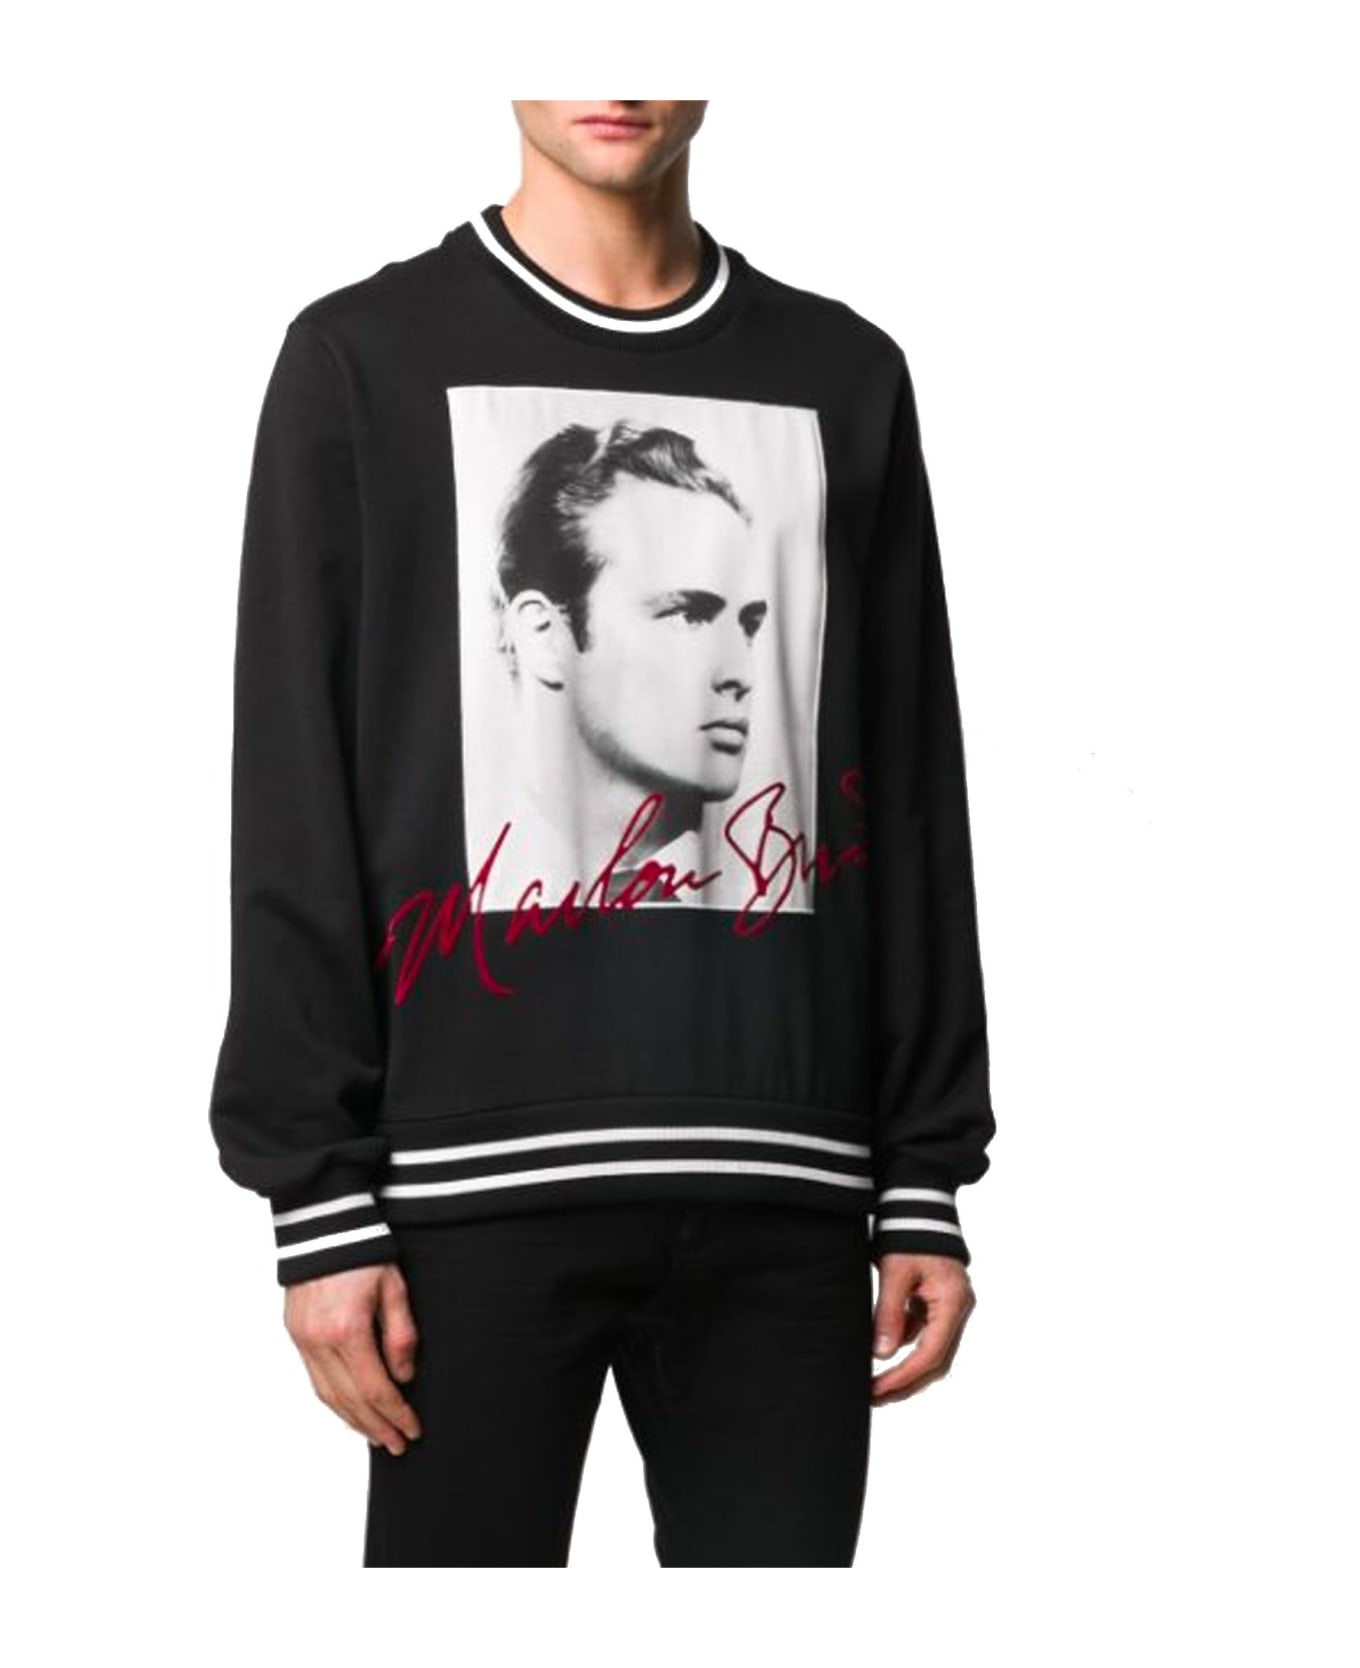 Dolce Logo & Gabbana Marlon Brando Sweatshirt - Black